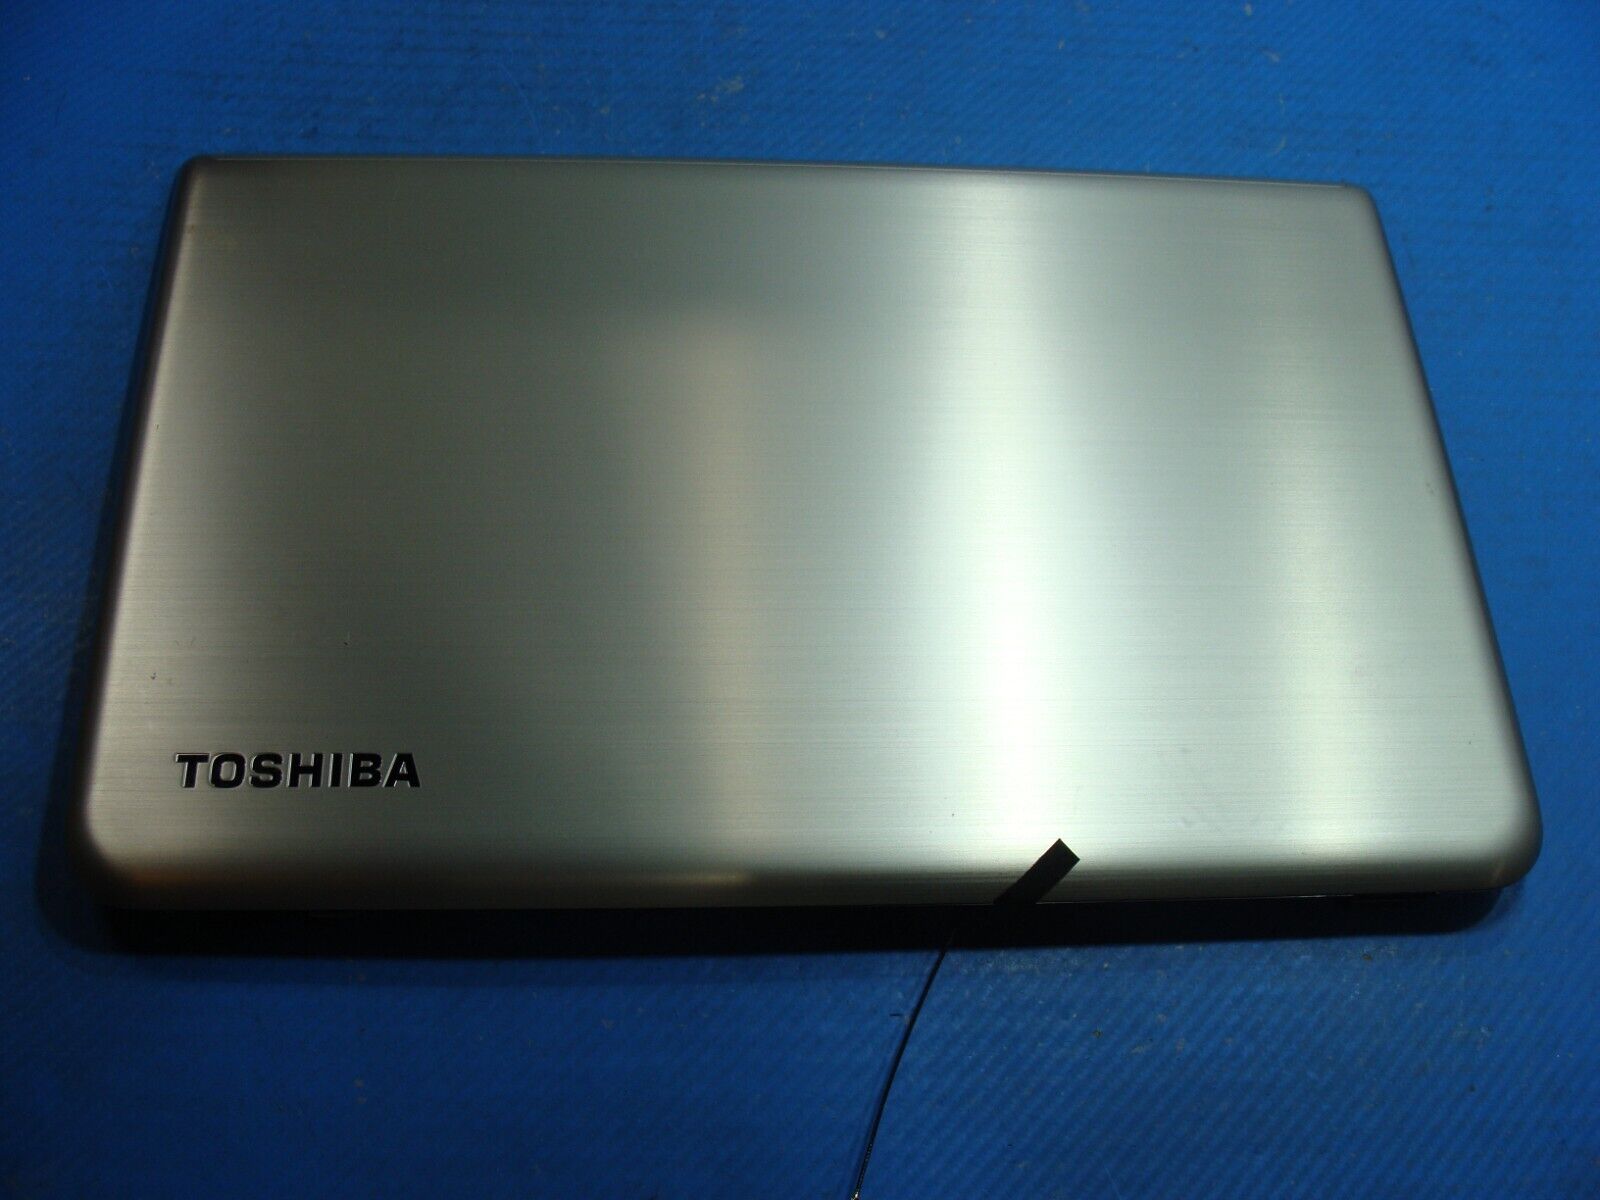 Toshiba Satellite S75-B7394 17.3